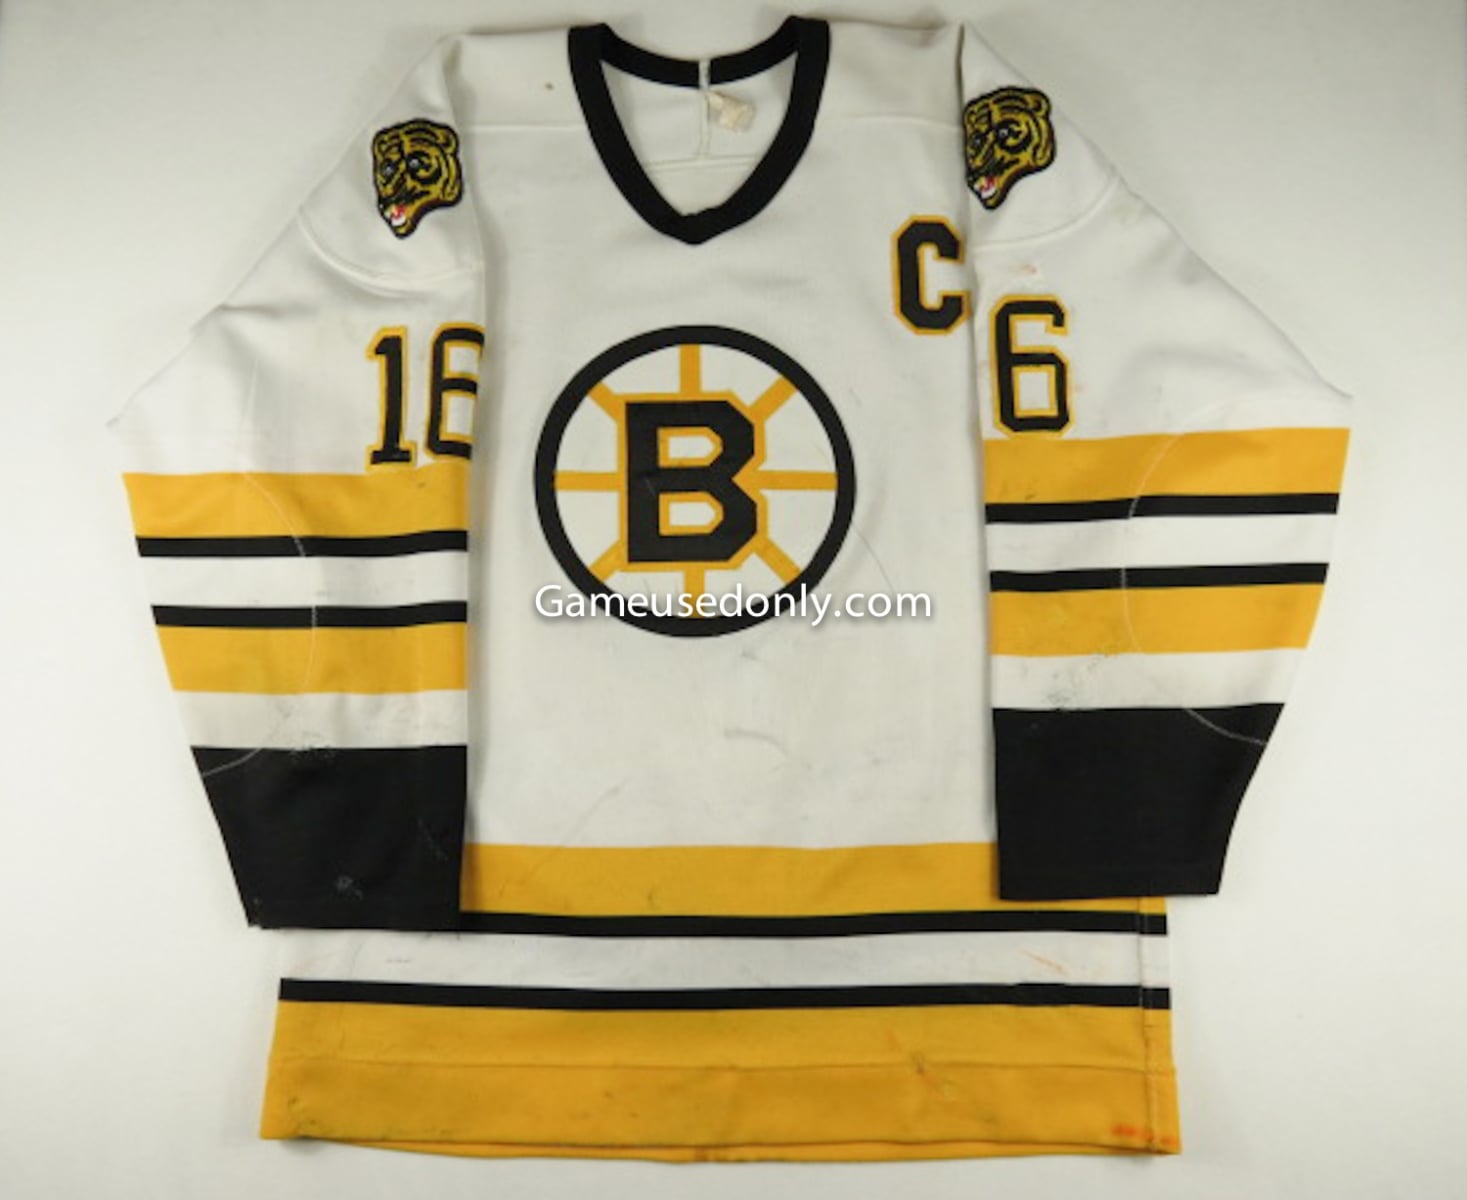 Bruins to retire Rick Middleton's No.?16 jersey – Boston Herald